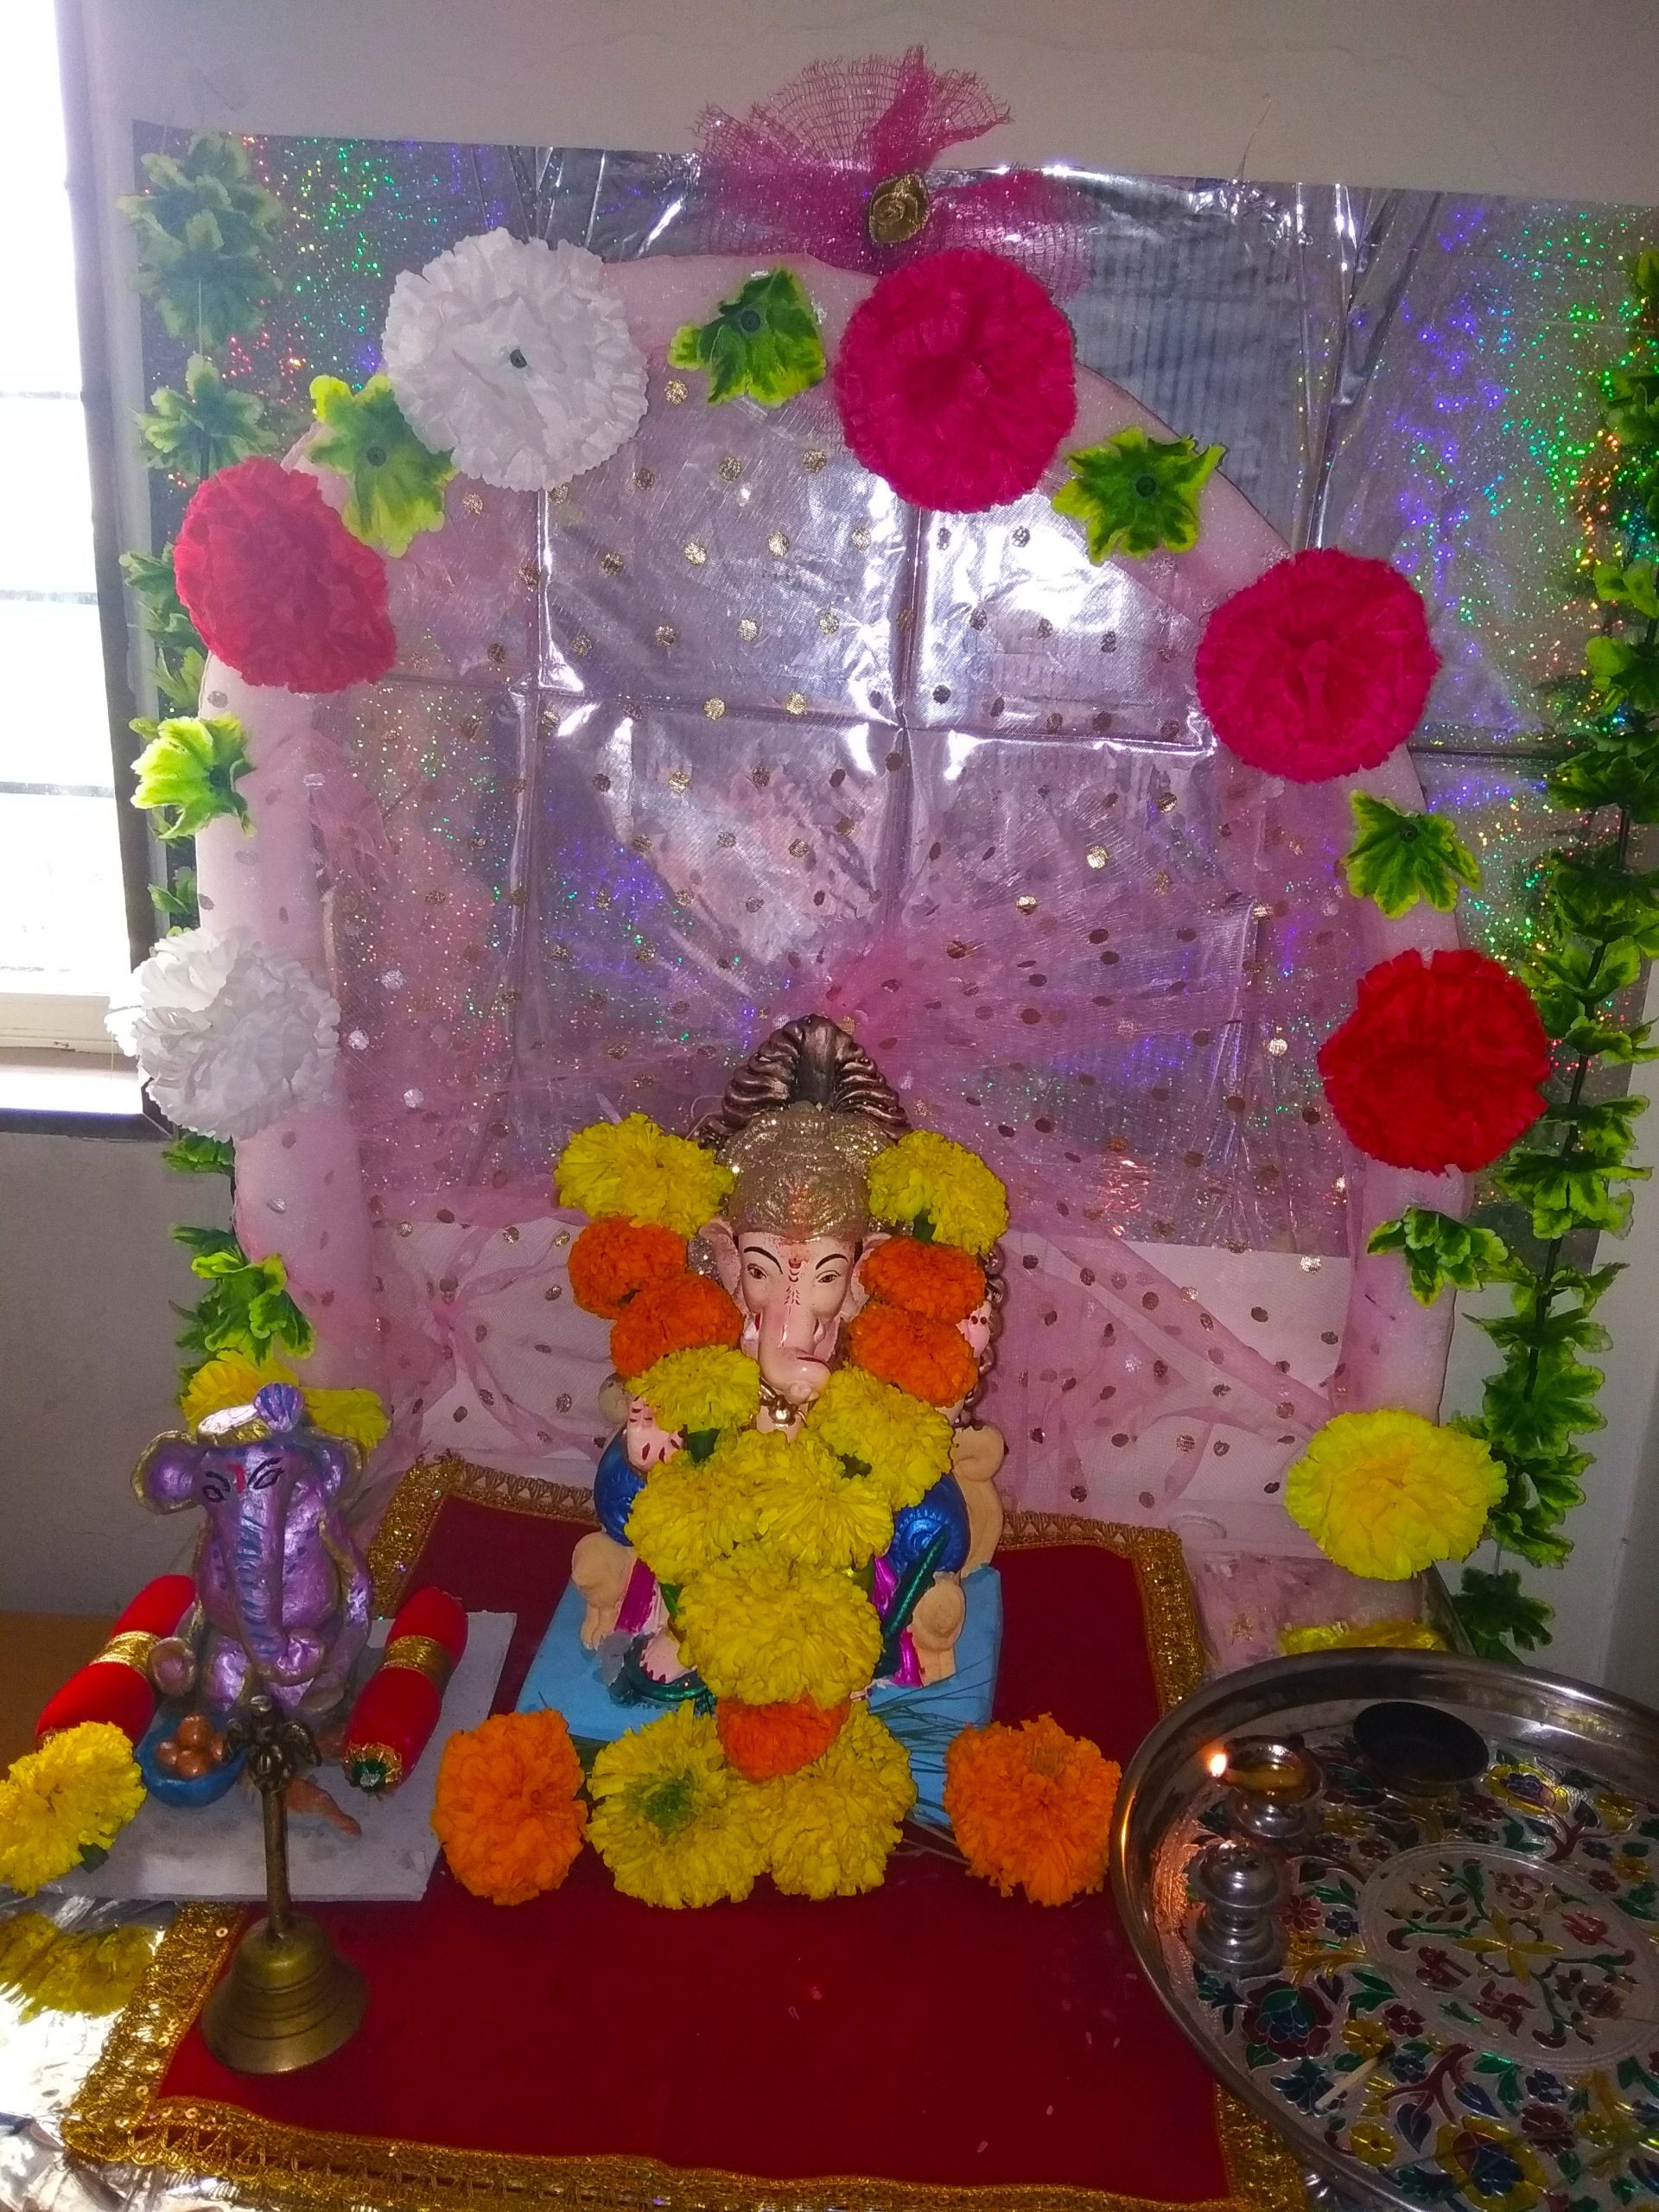 kashmi chellaramani - Ganesha Photo Contest - 2019